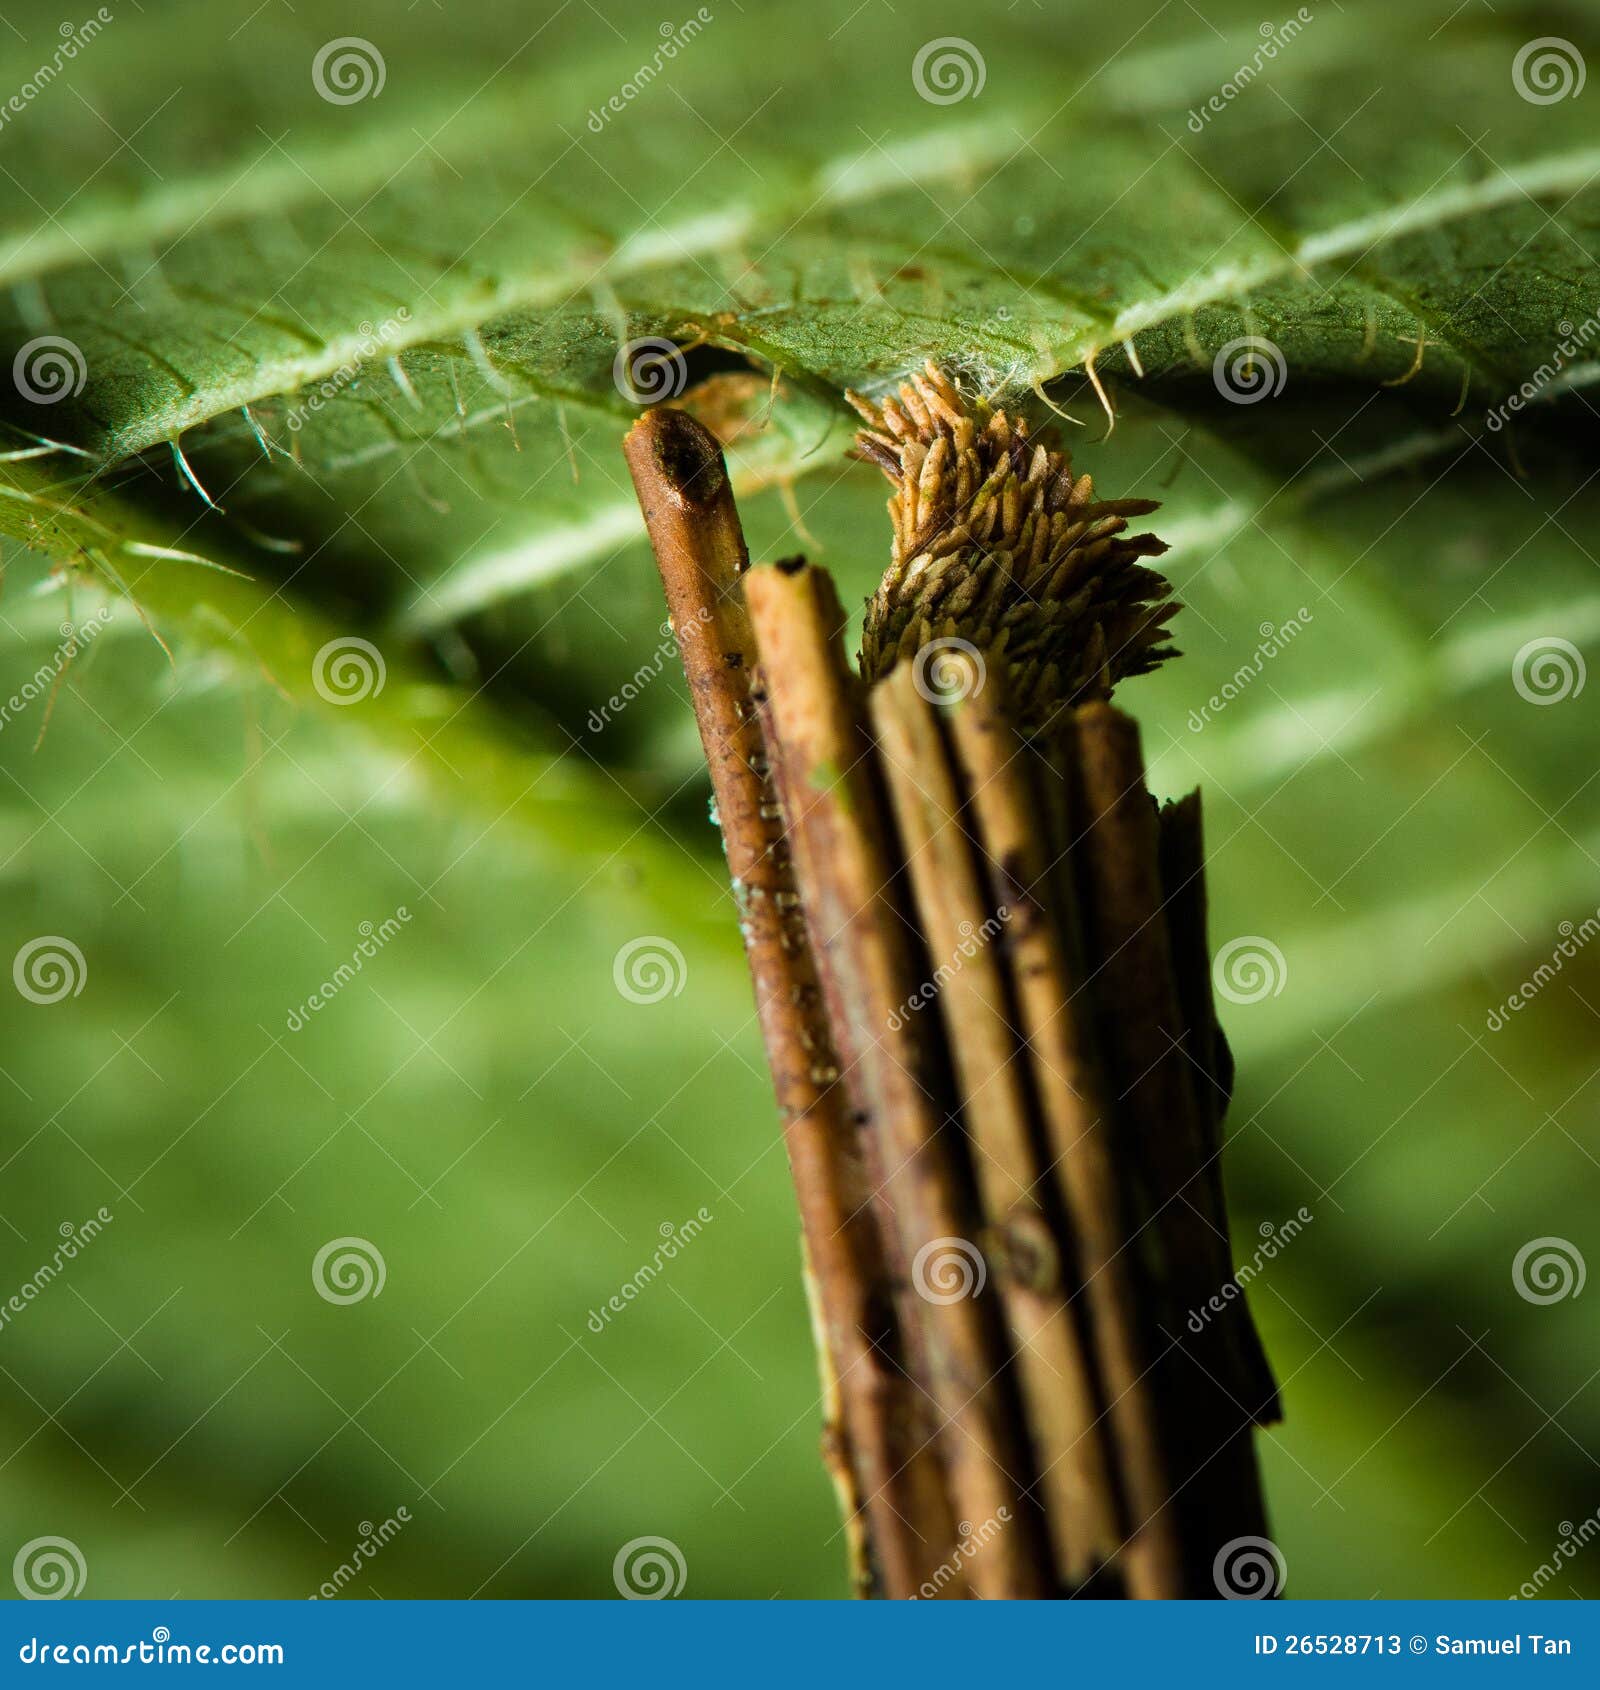 Stick Worm stock image. Image of hanging, stick, jungle - 26528713